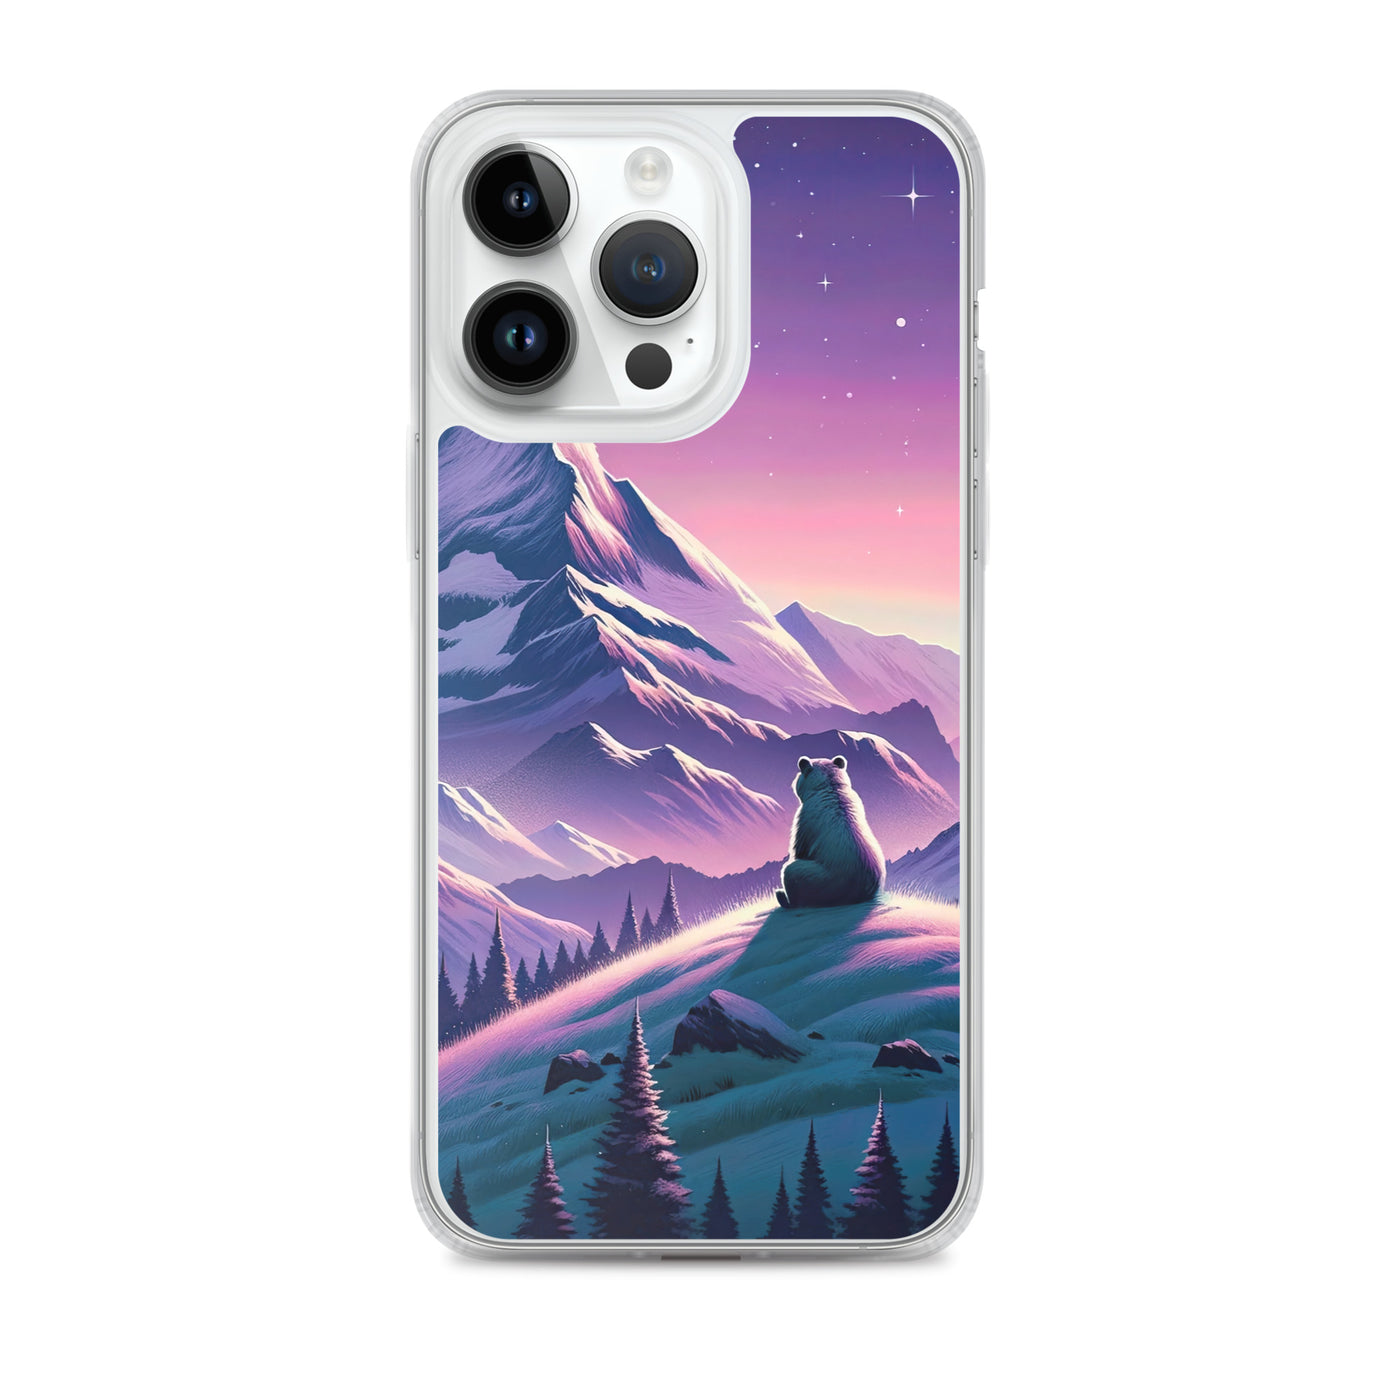 Bezaubernder Alpenabend mit Bär, lavendel-rosafarbener Himmel (AN) - iPhone Schutzhülle (durchsichtig) xxx yyy zzz iPhone 14 Pro Max